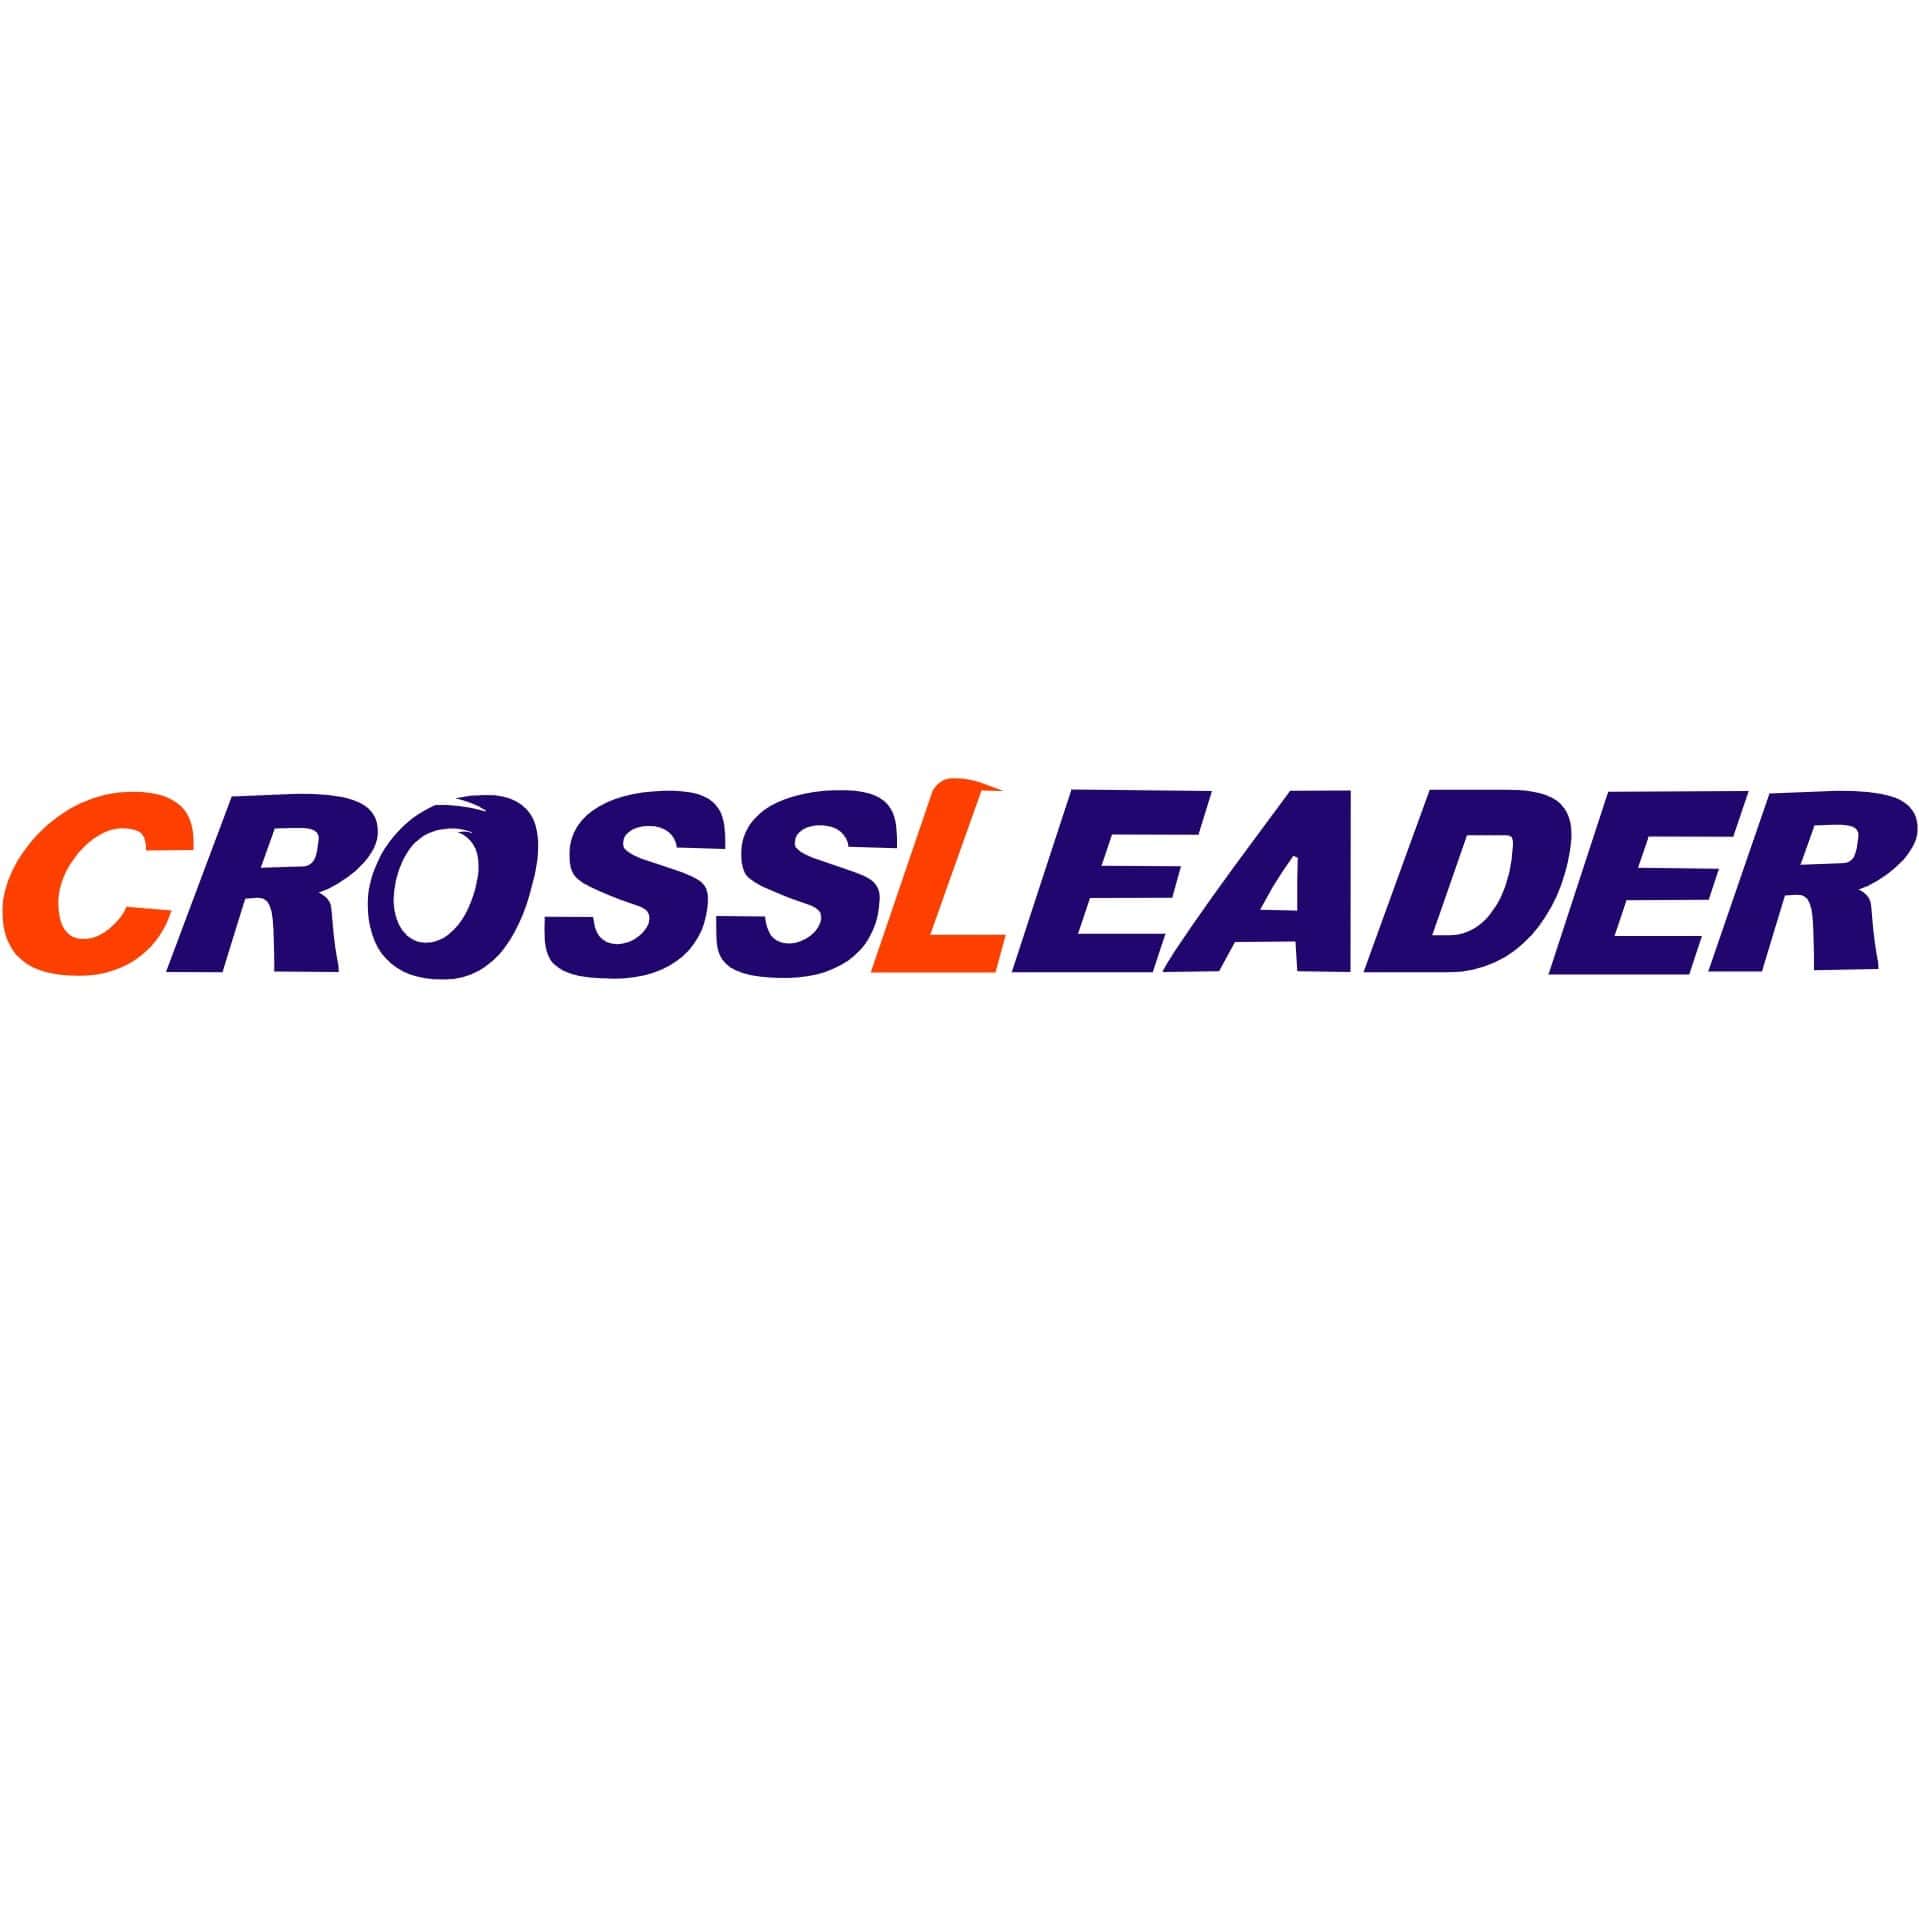 Crossleader logo